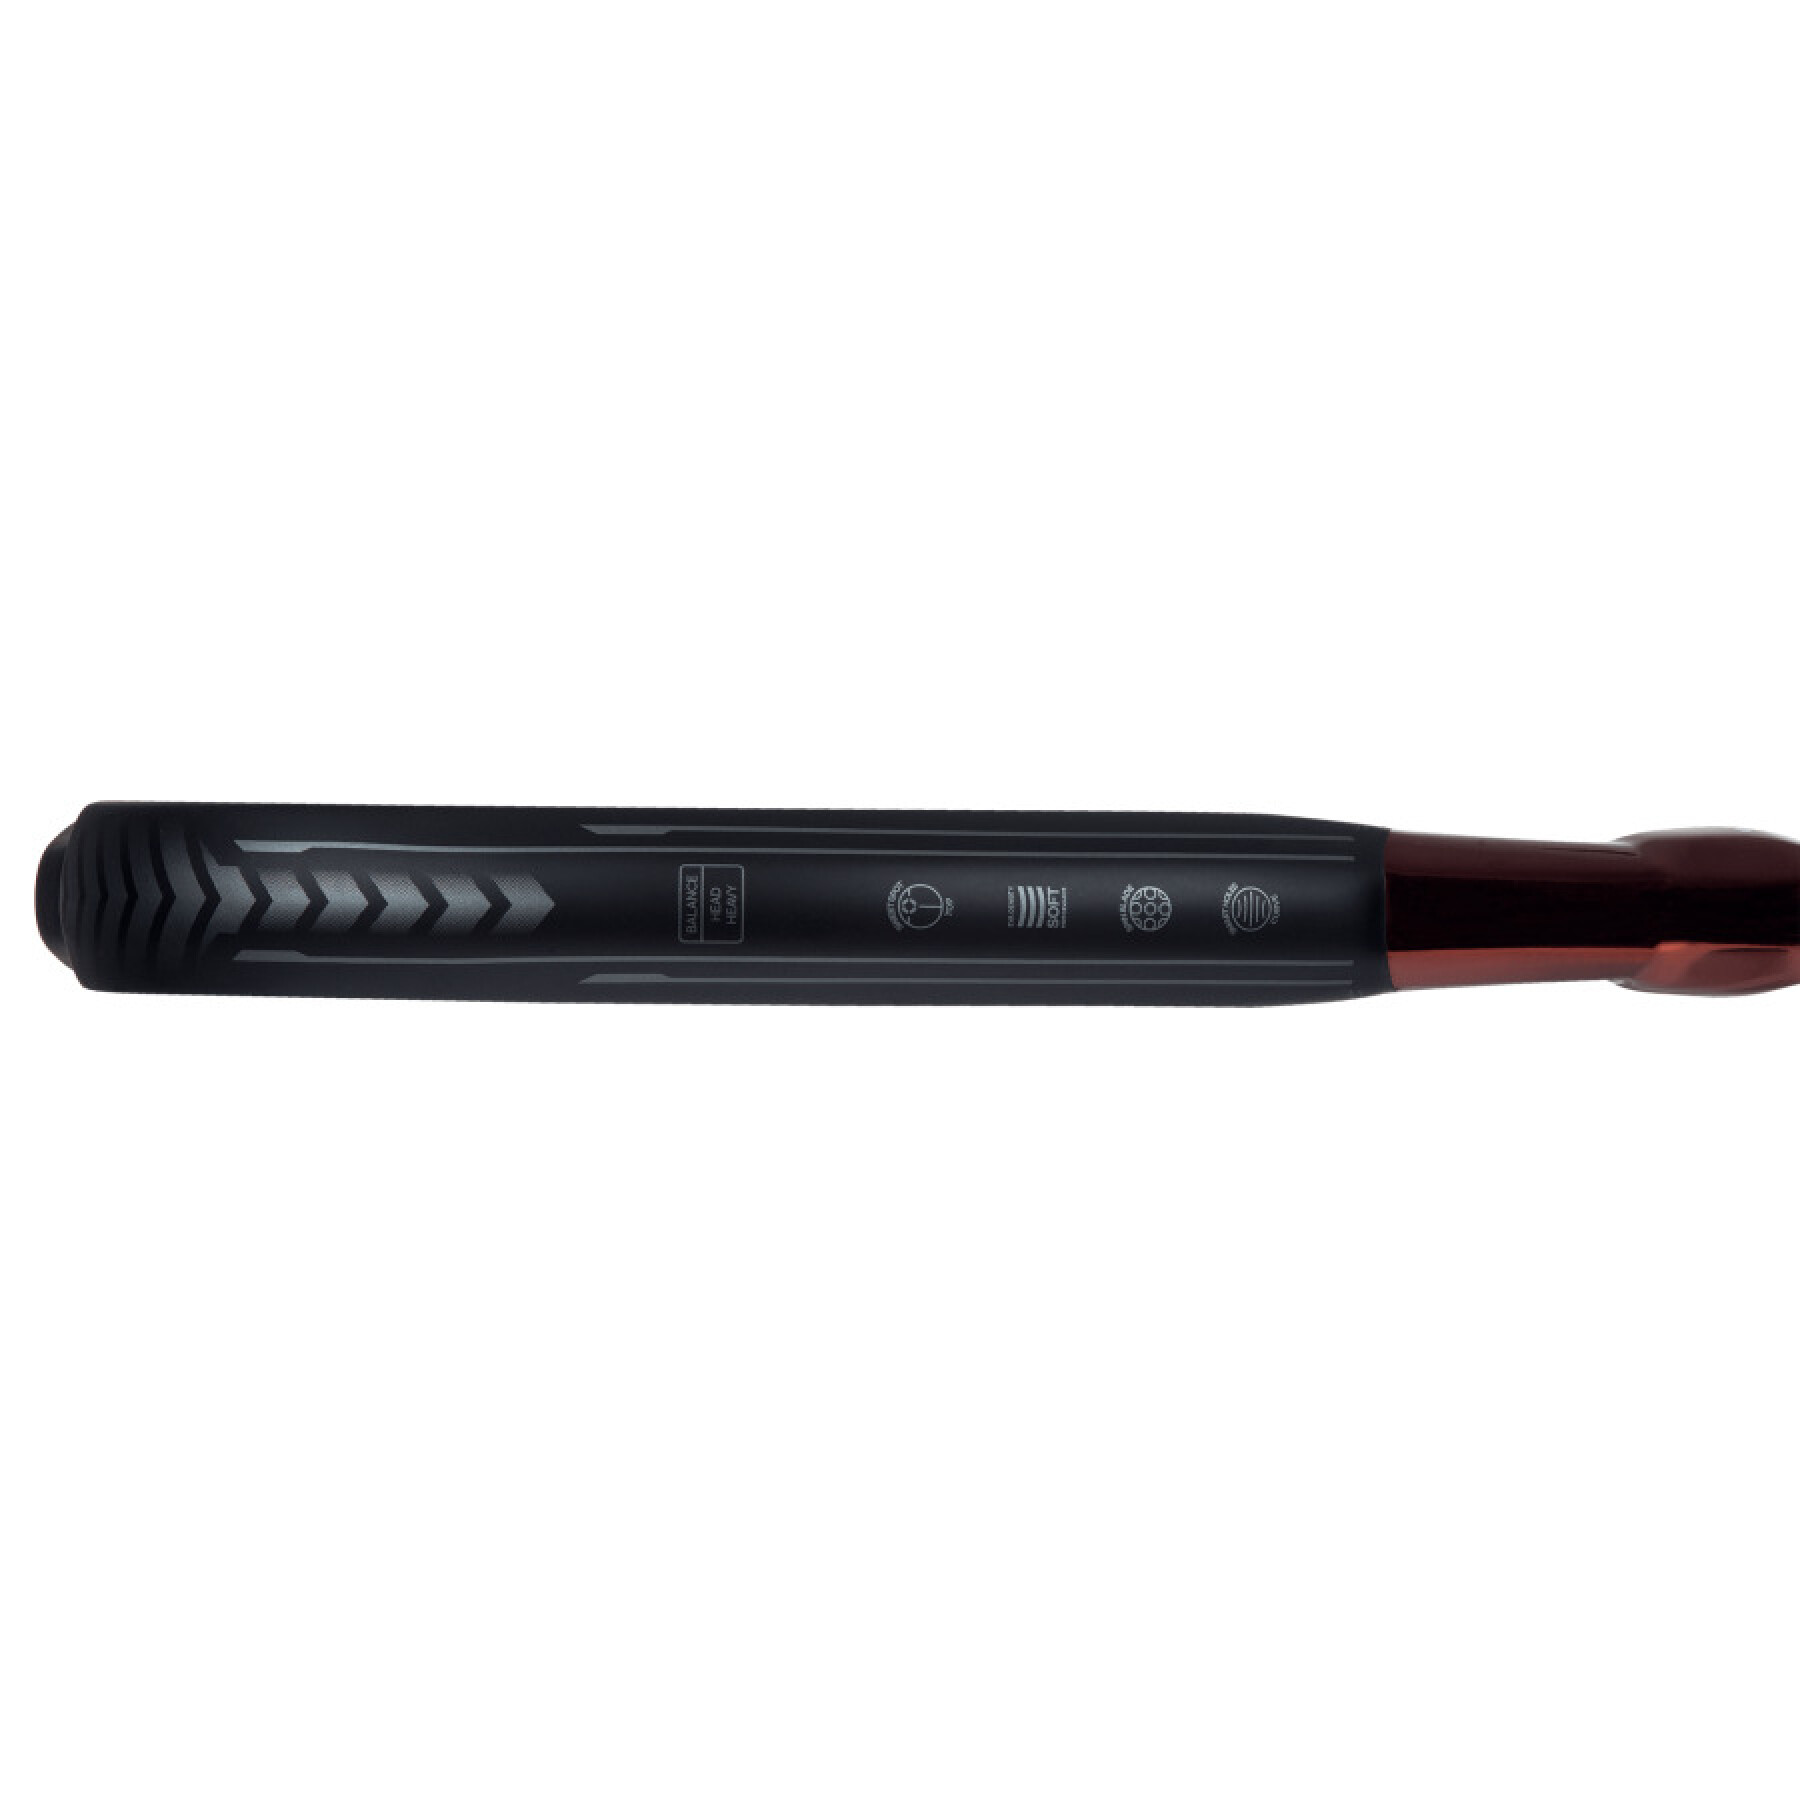 Padel rackets adidas Metalbone Carbon 3.3